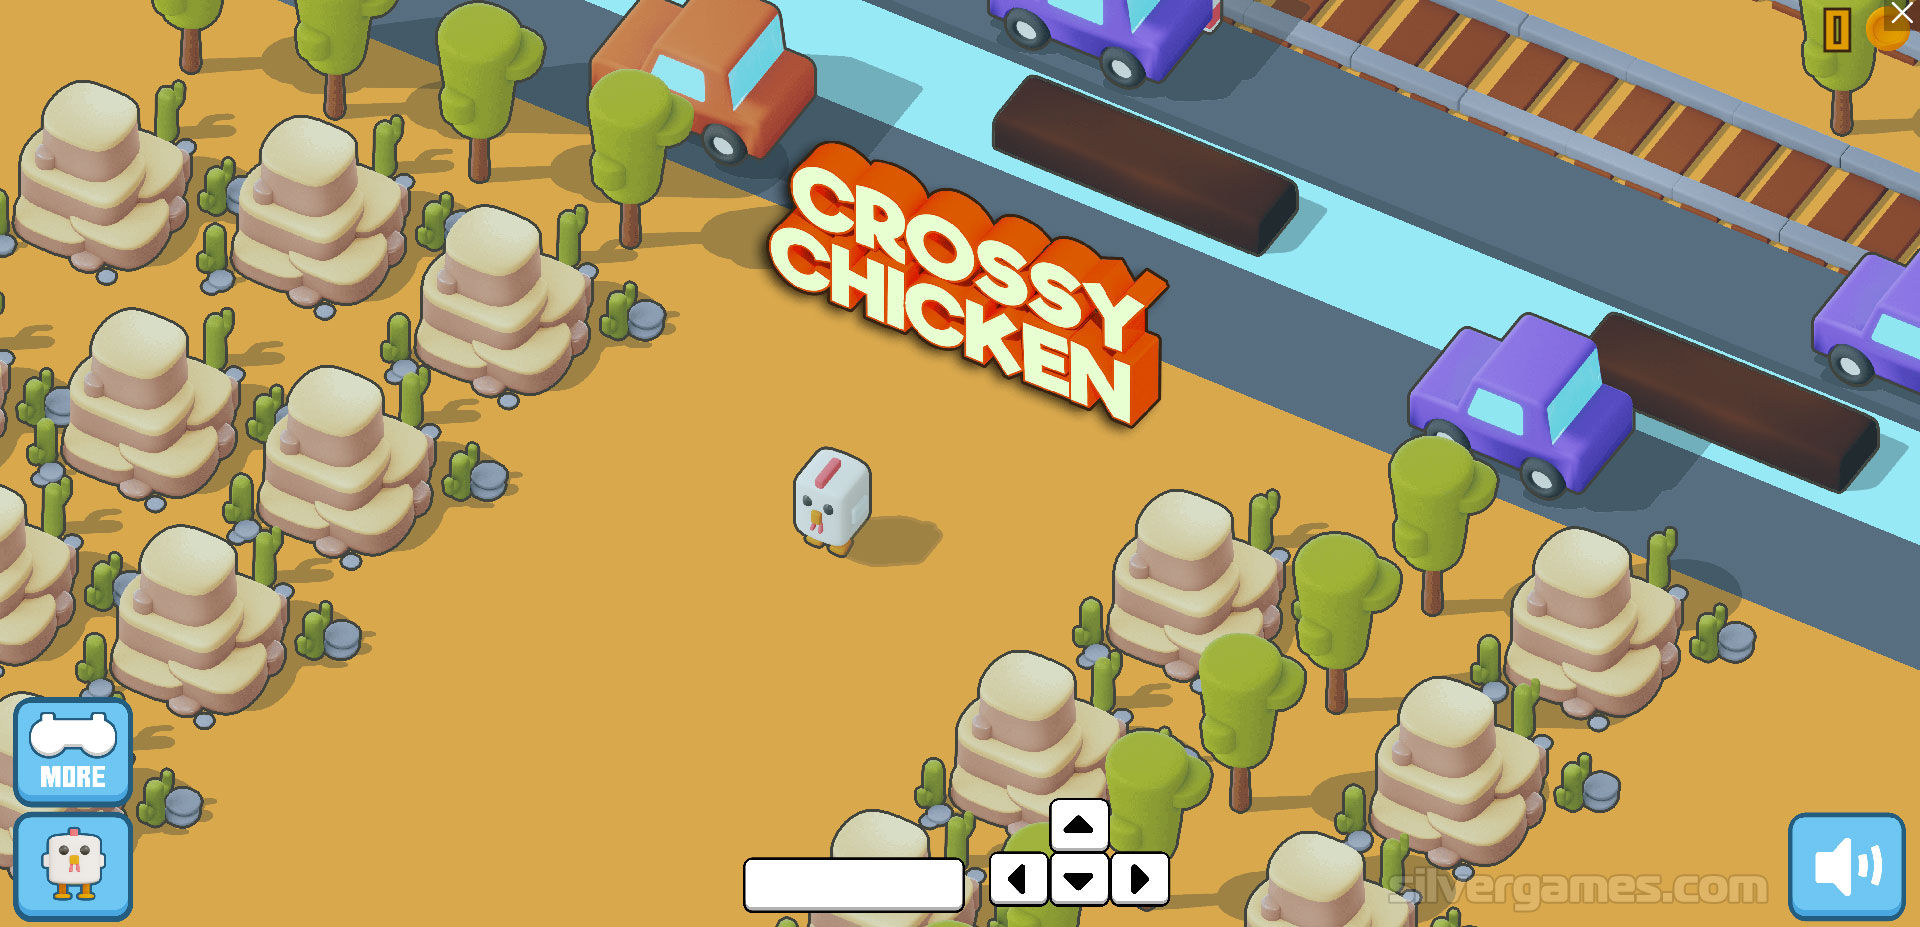 Chicken Simulator?: Crossy Road 3d, Rush Hour - Games